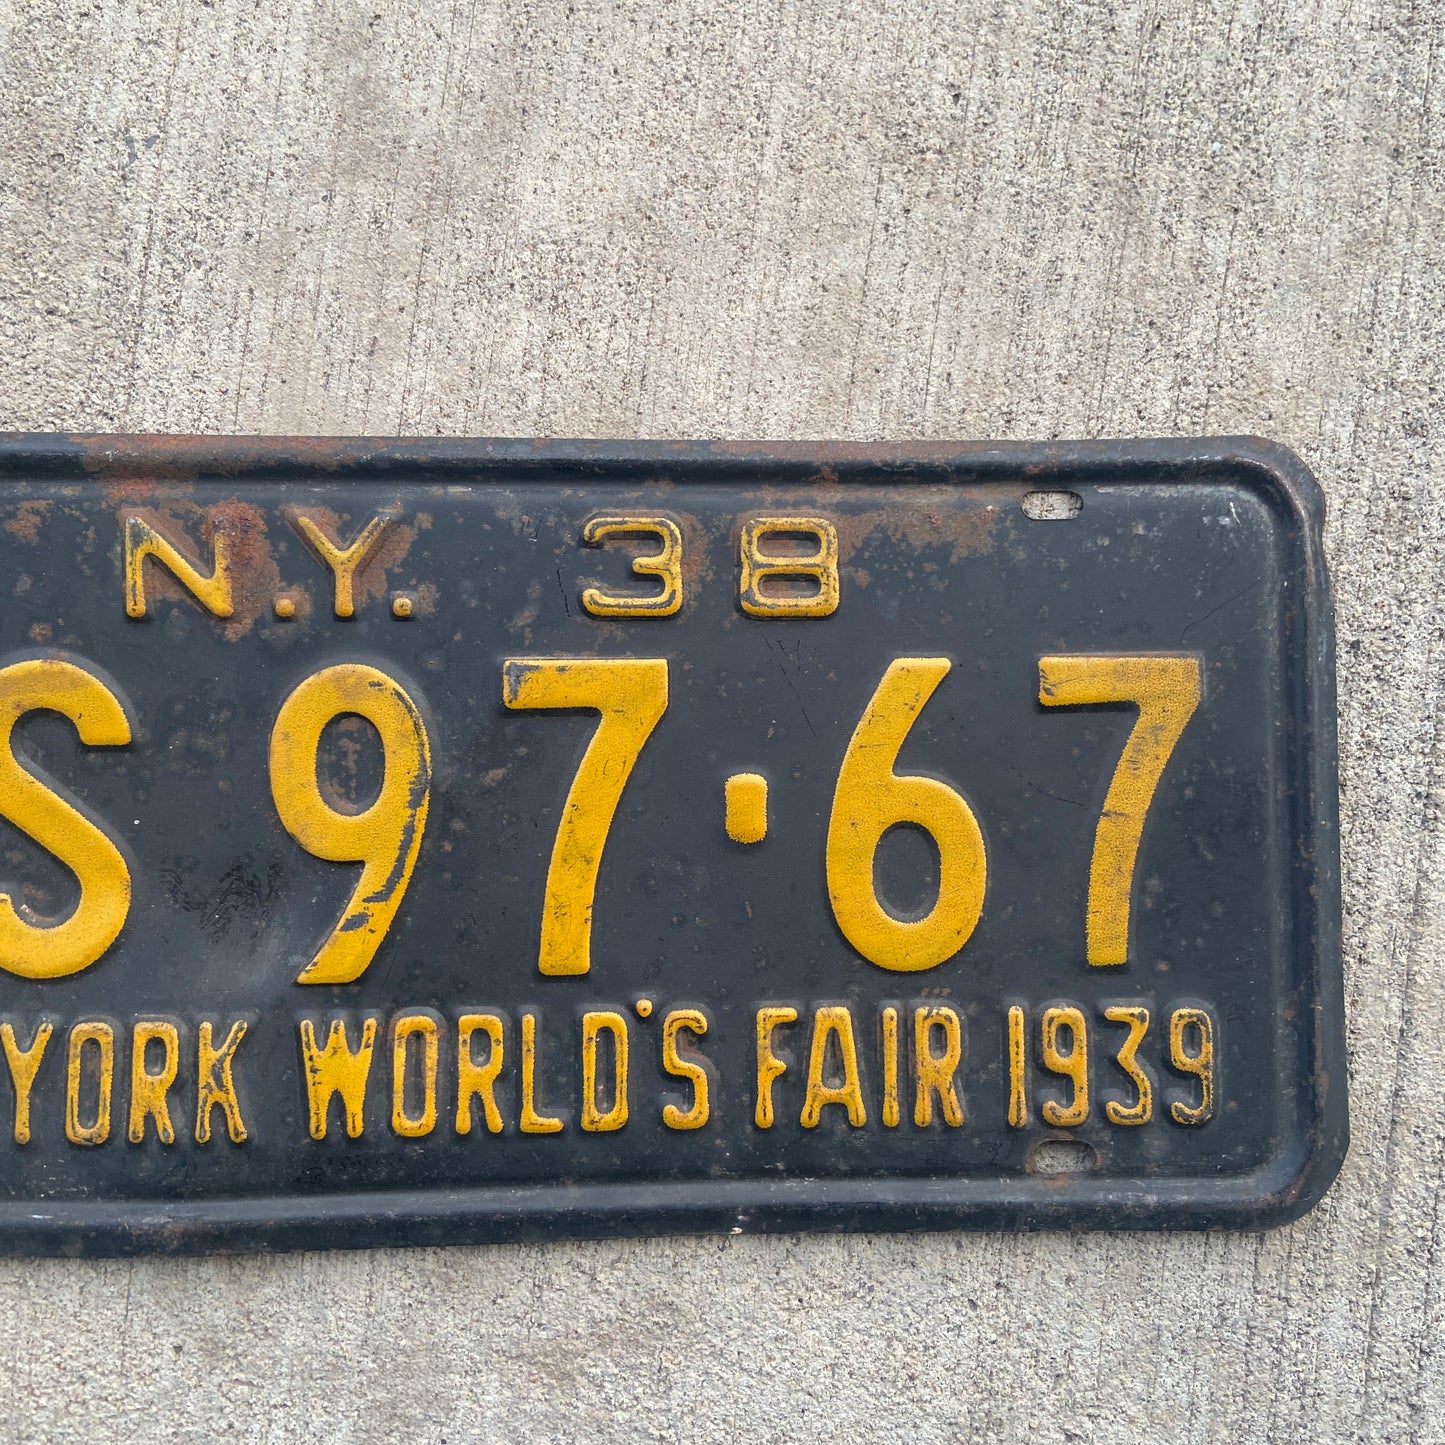 1938 New York License Plate 1939 World's Fair Wall Decor 5S9767